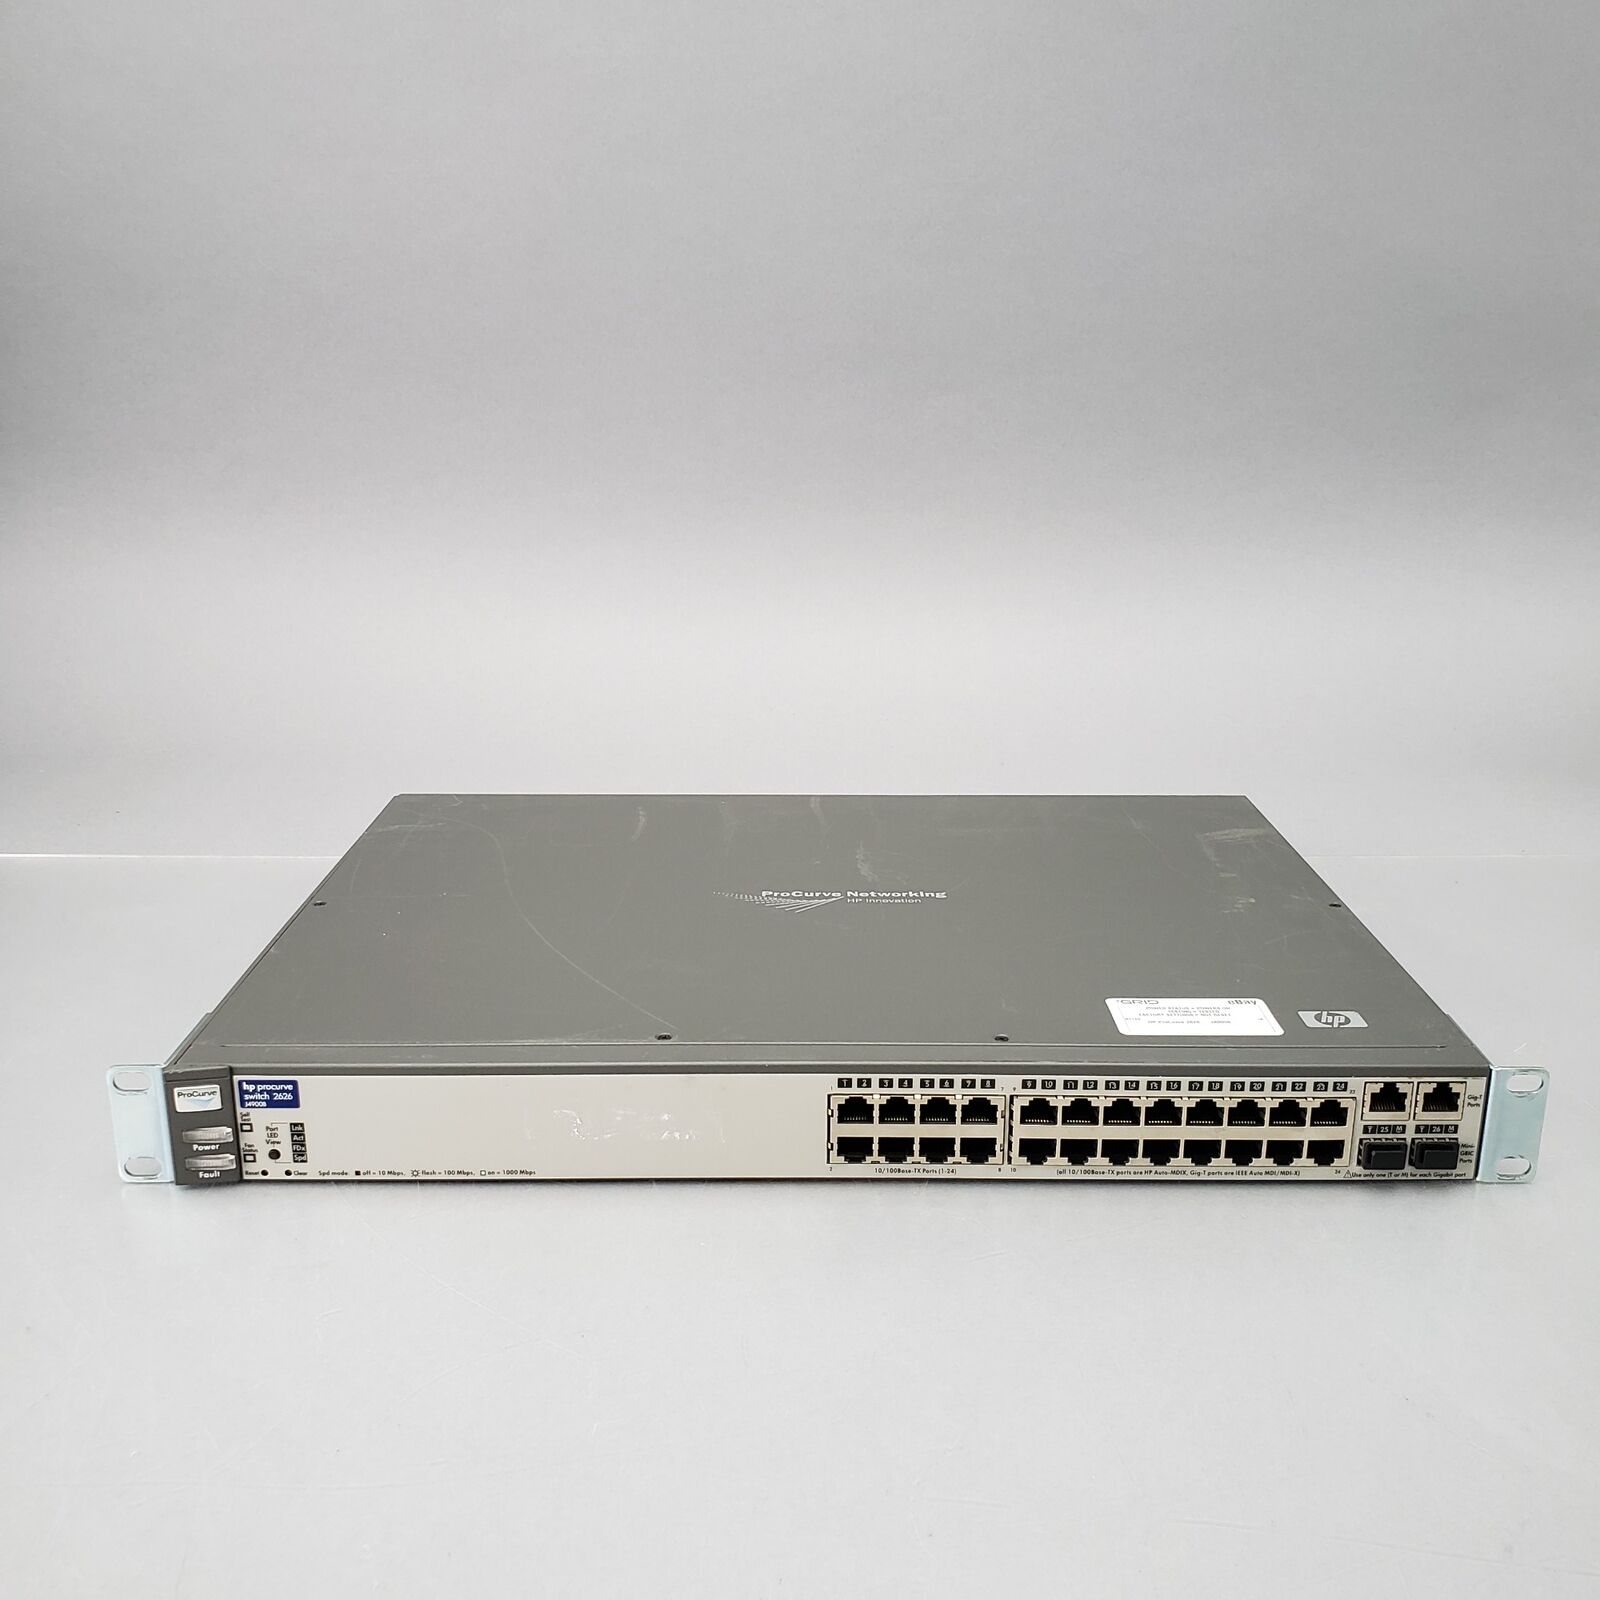 HP ProCurve Switch 2626 J4900B Ethernet Switch - Tested